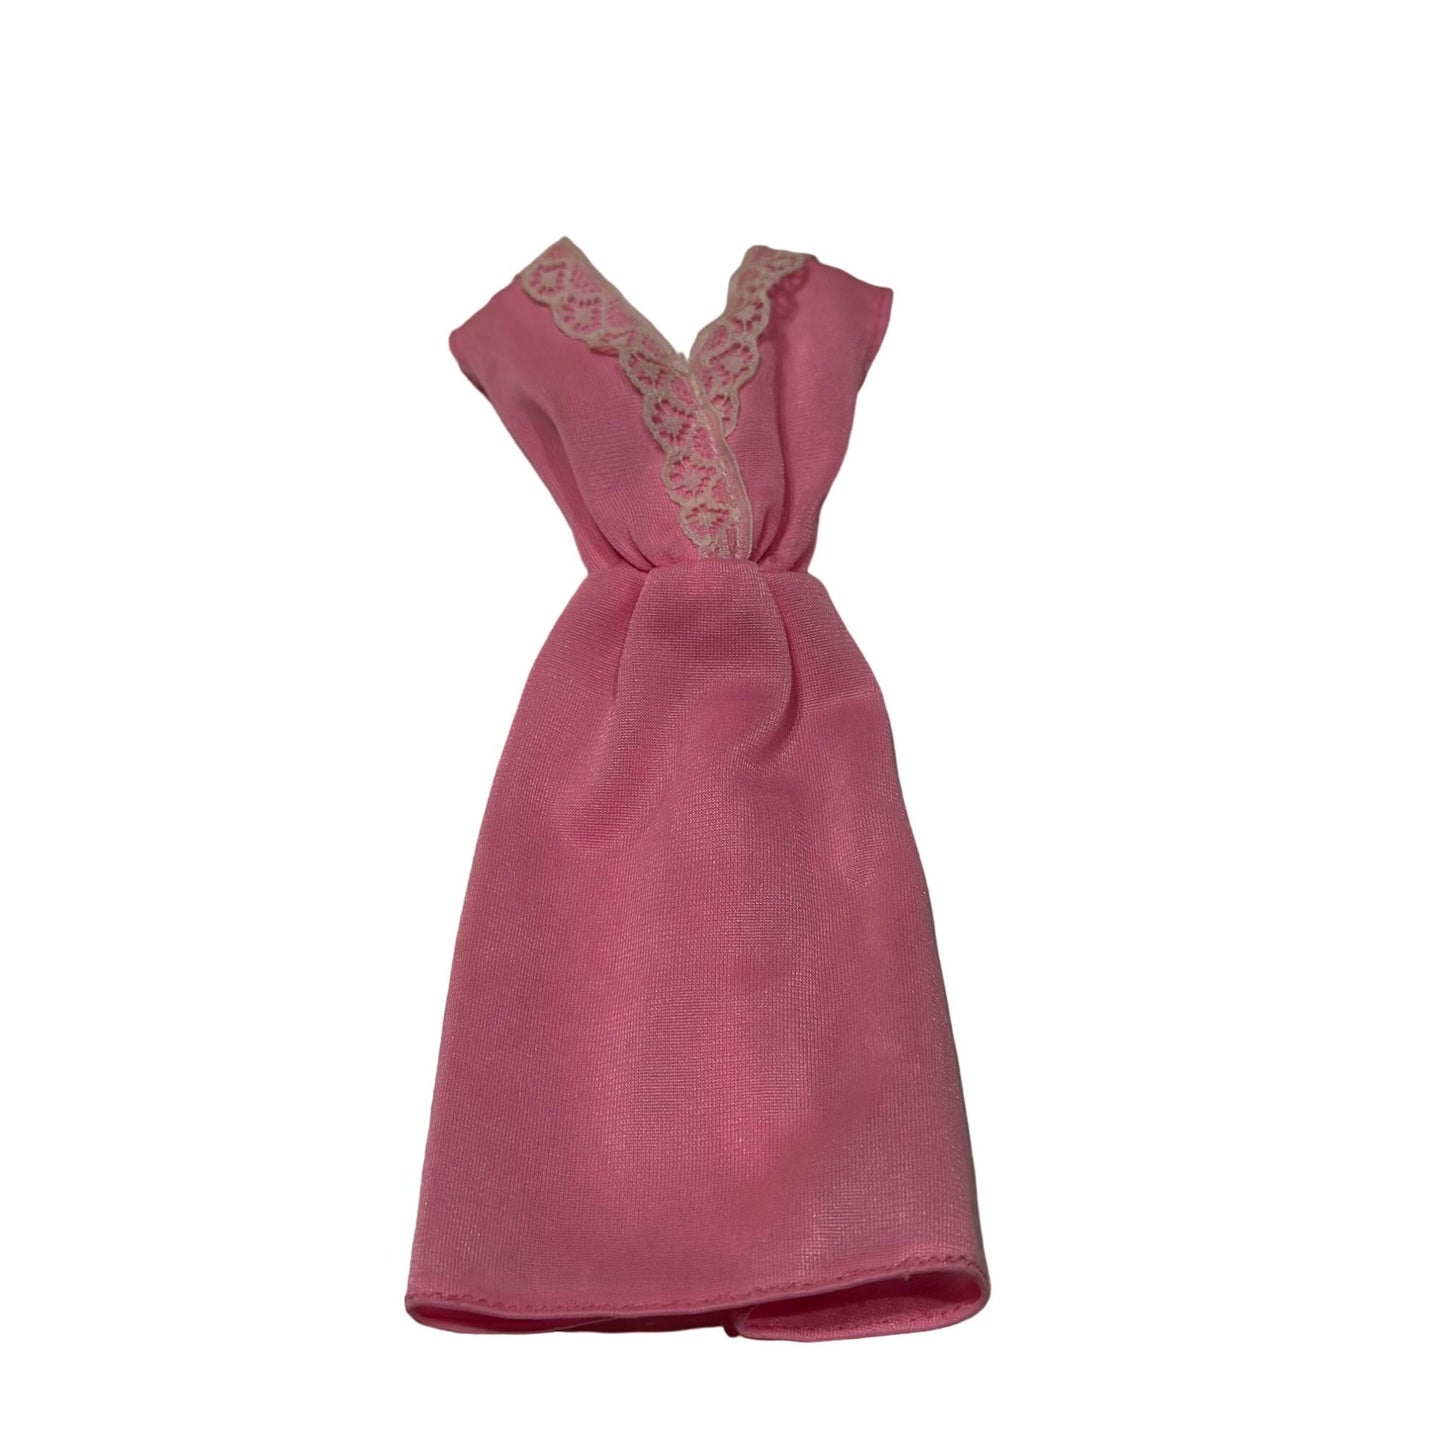 Vintage Mattel 1985 Barbie Doll Fashion Fun Pink Dress Collectible Classic Rare